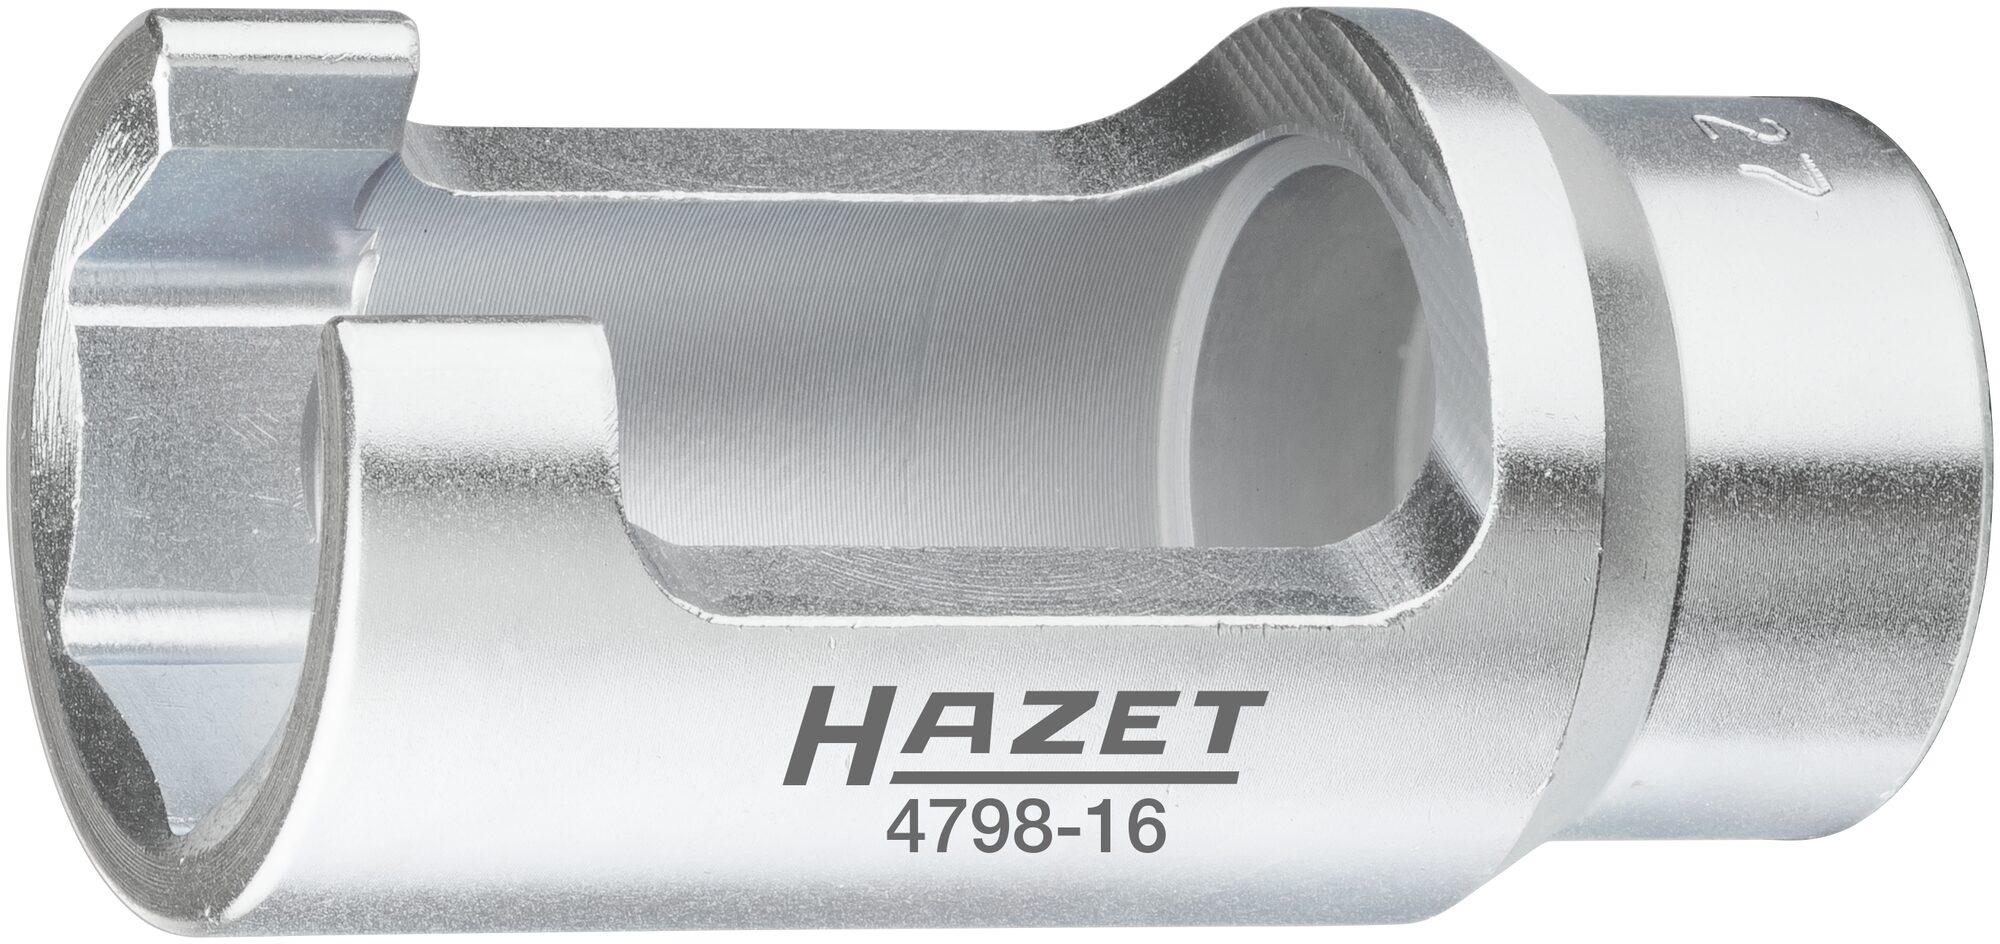 HAZET Injektor Steckschlüsseleinsatz Siemens s 27 mm 4798-16 · Vierkant hohl 12,5 mm (1/2 Zoll) · Außen Sechskant Profil · 27 mm